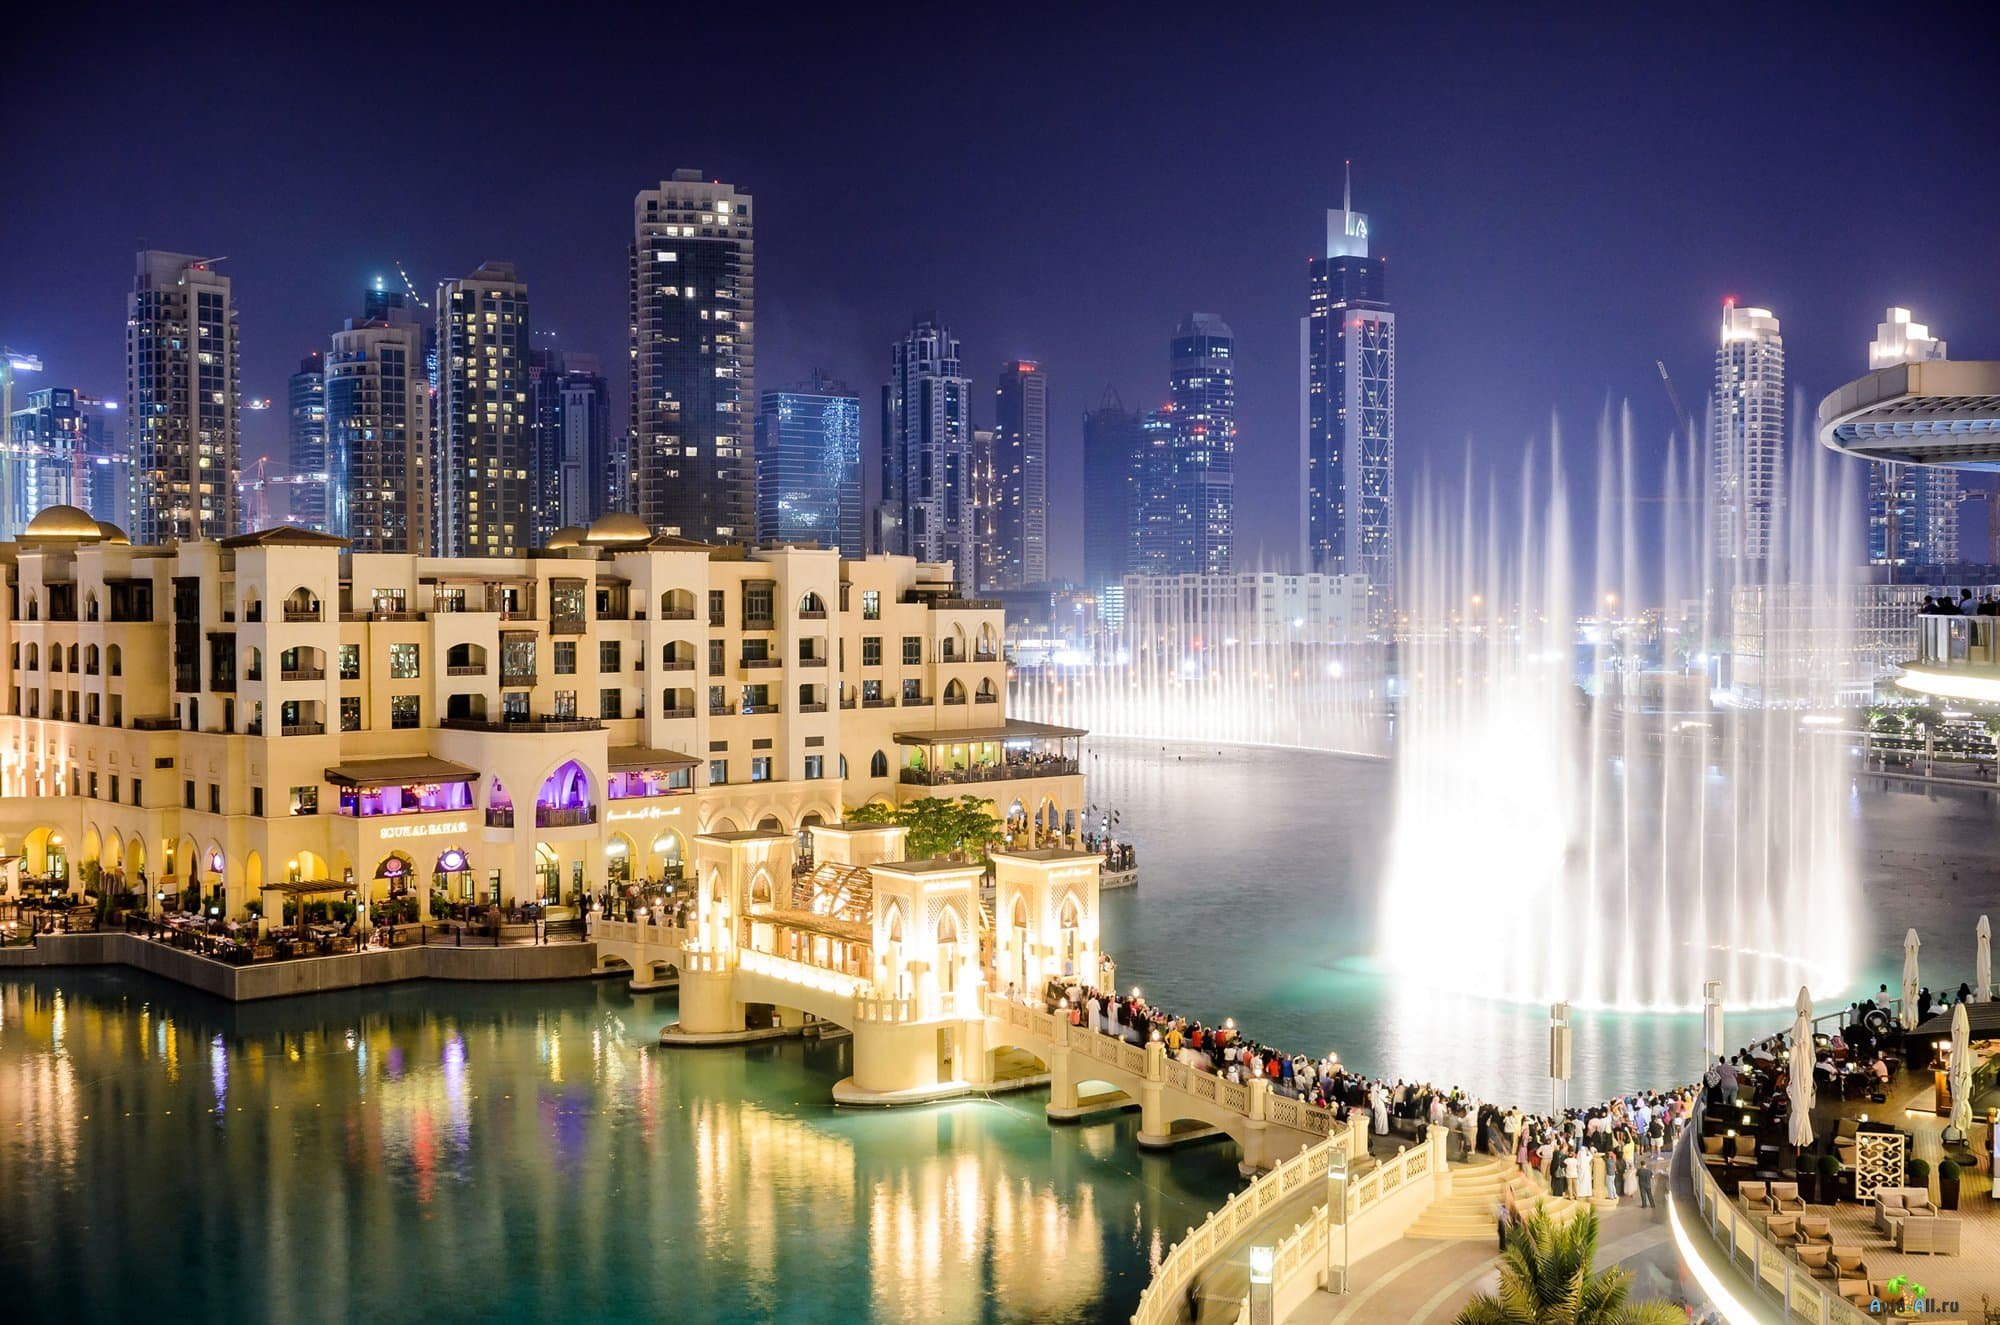 Аль хайма молл. Эмират Дубай. Дубай столица. Фонтан Дубай Объединённые арабские эмираты. Дубай достромичательности.